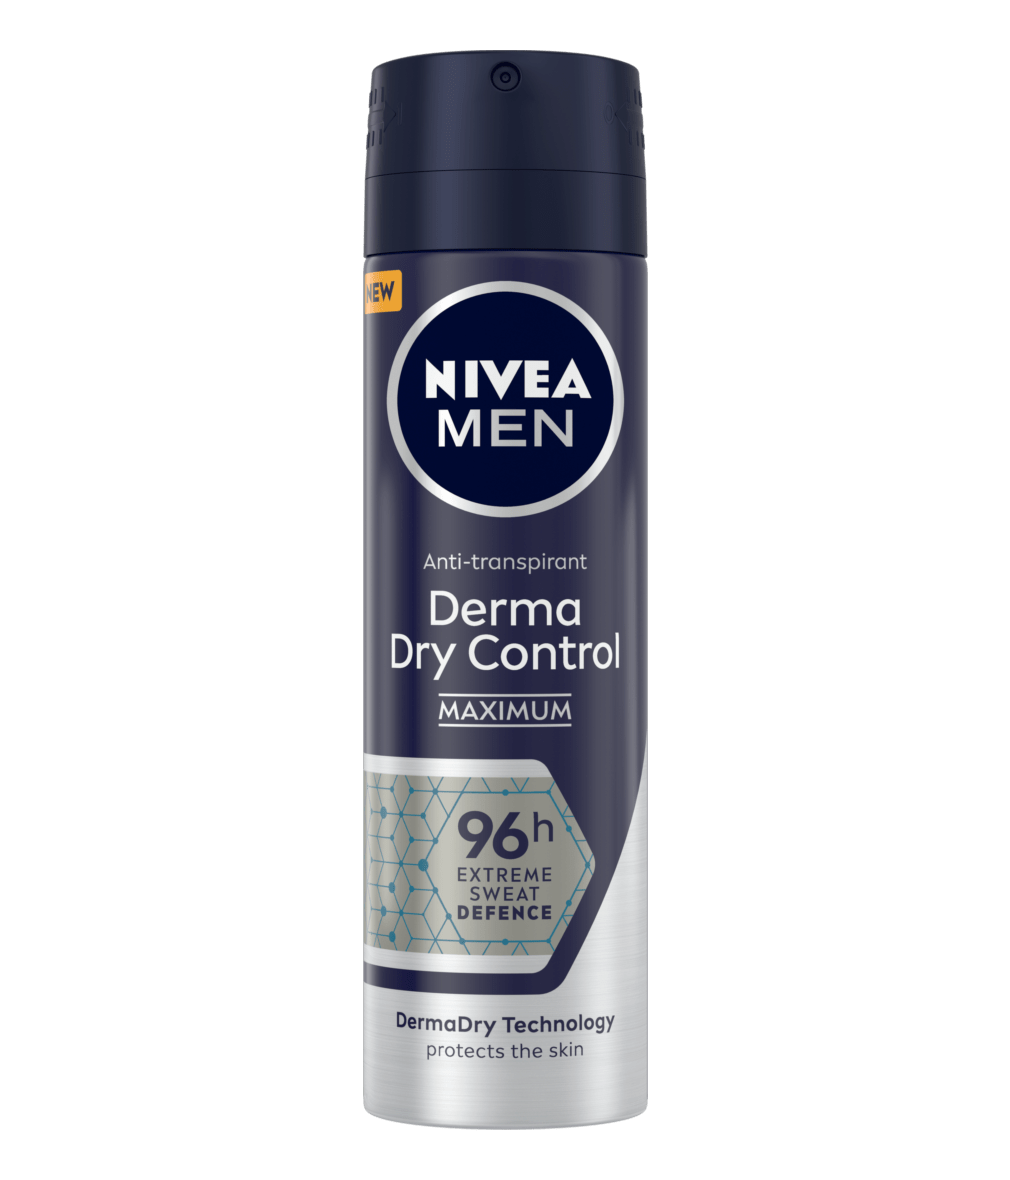 Derma Dry Control Anti-perspirant deodorant |